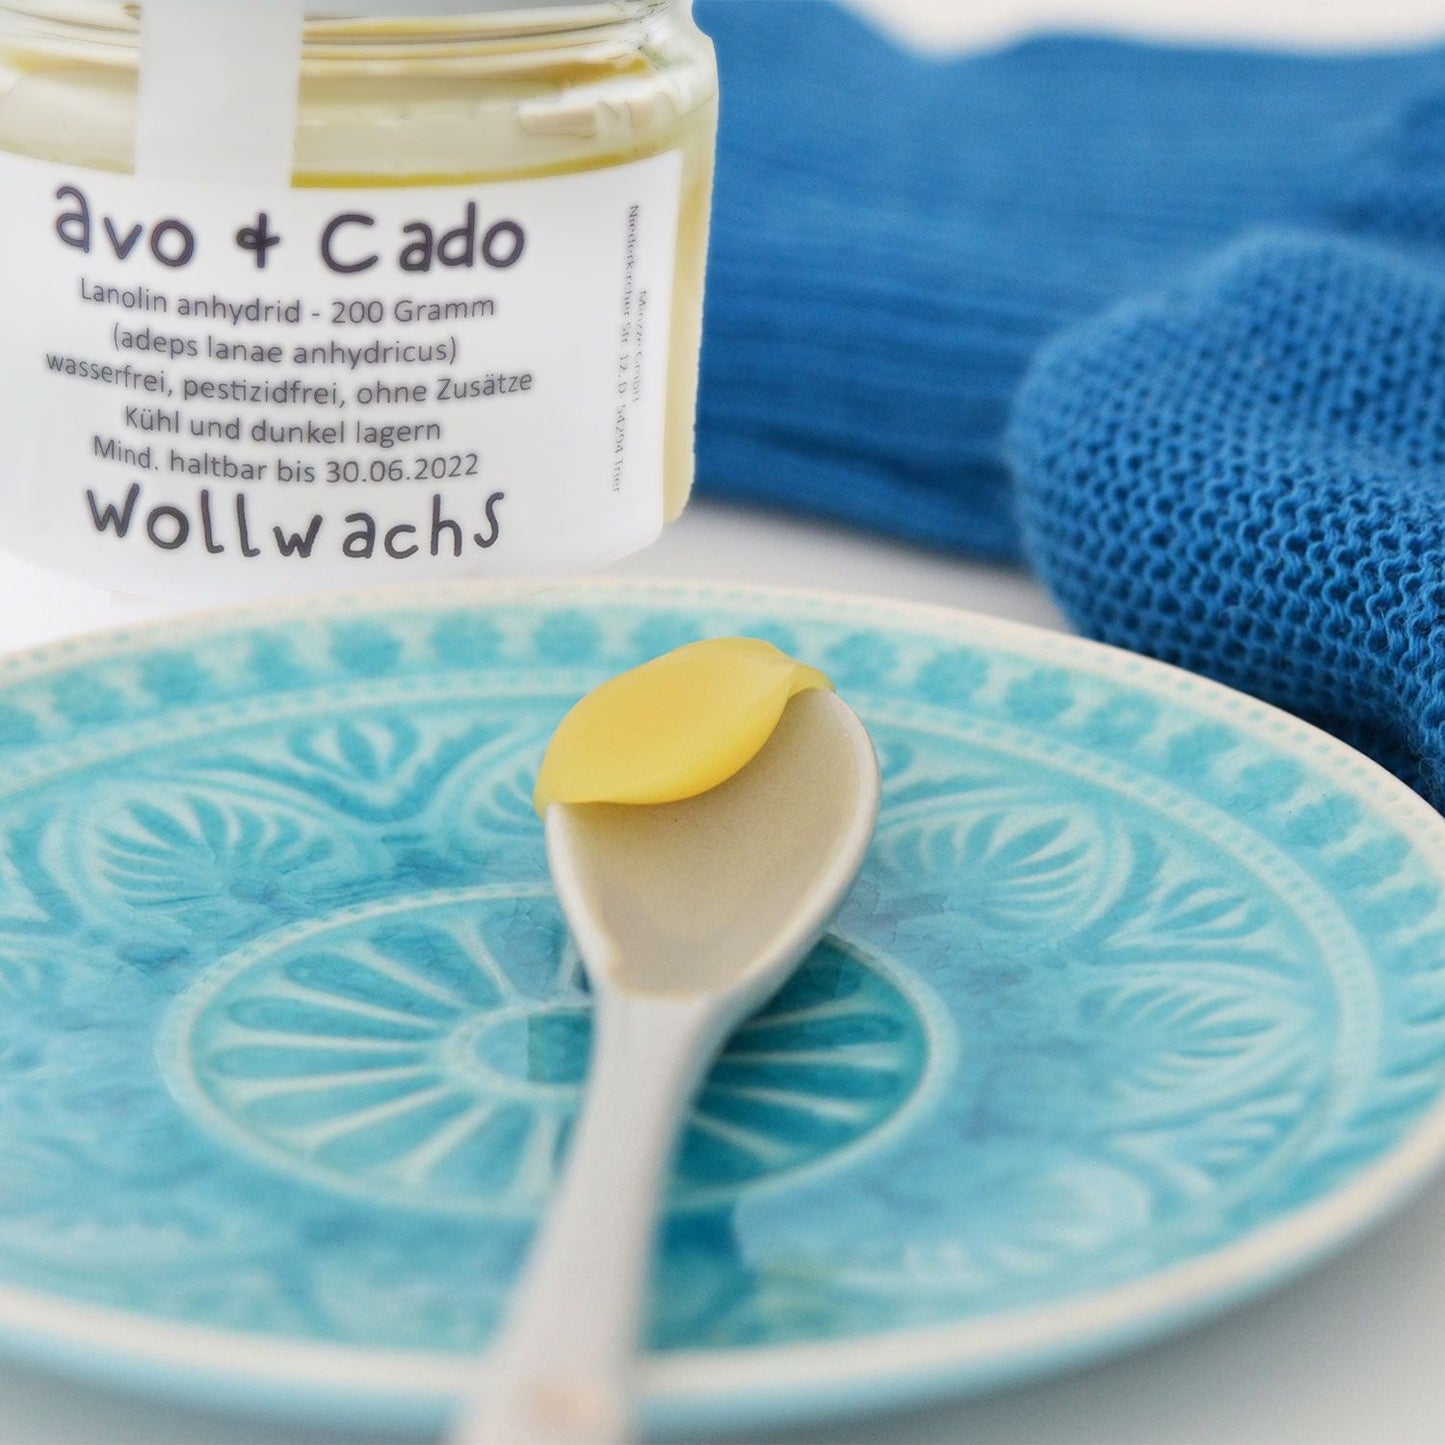 Avo and Cado - Wool Wax Lanolin-Accessories-Avo & Cado-200g-The Nappy Market